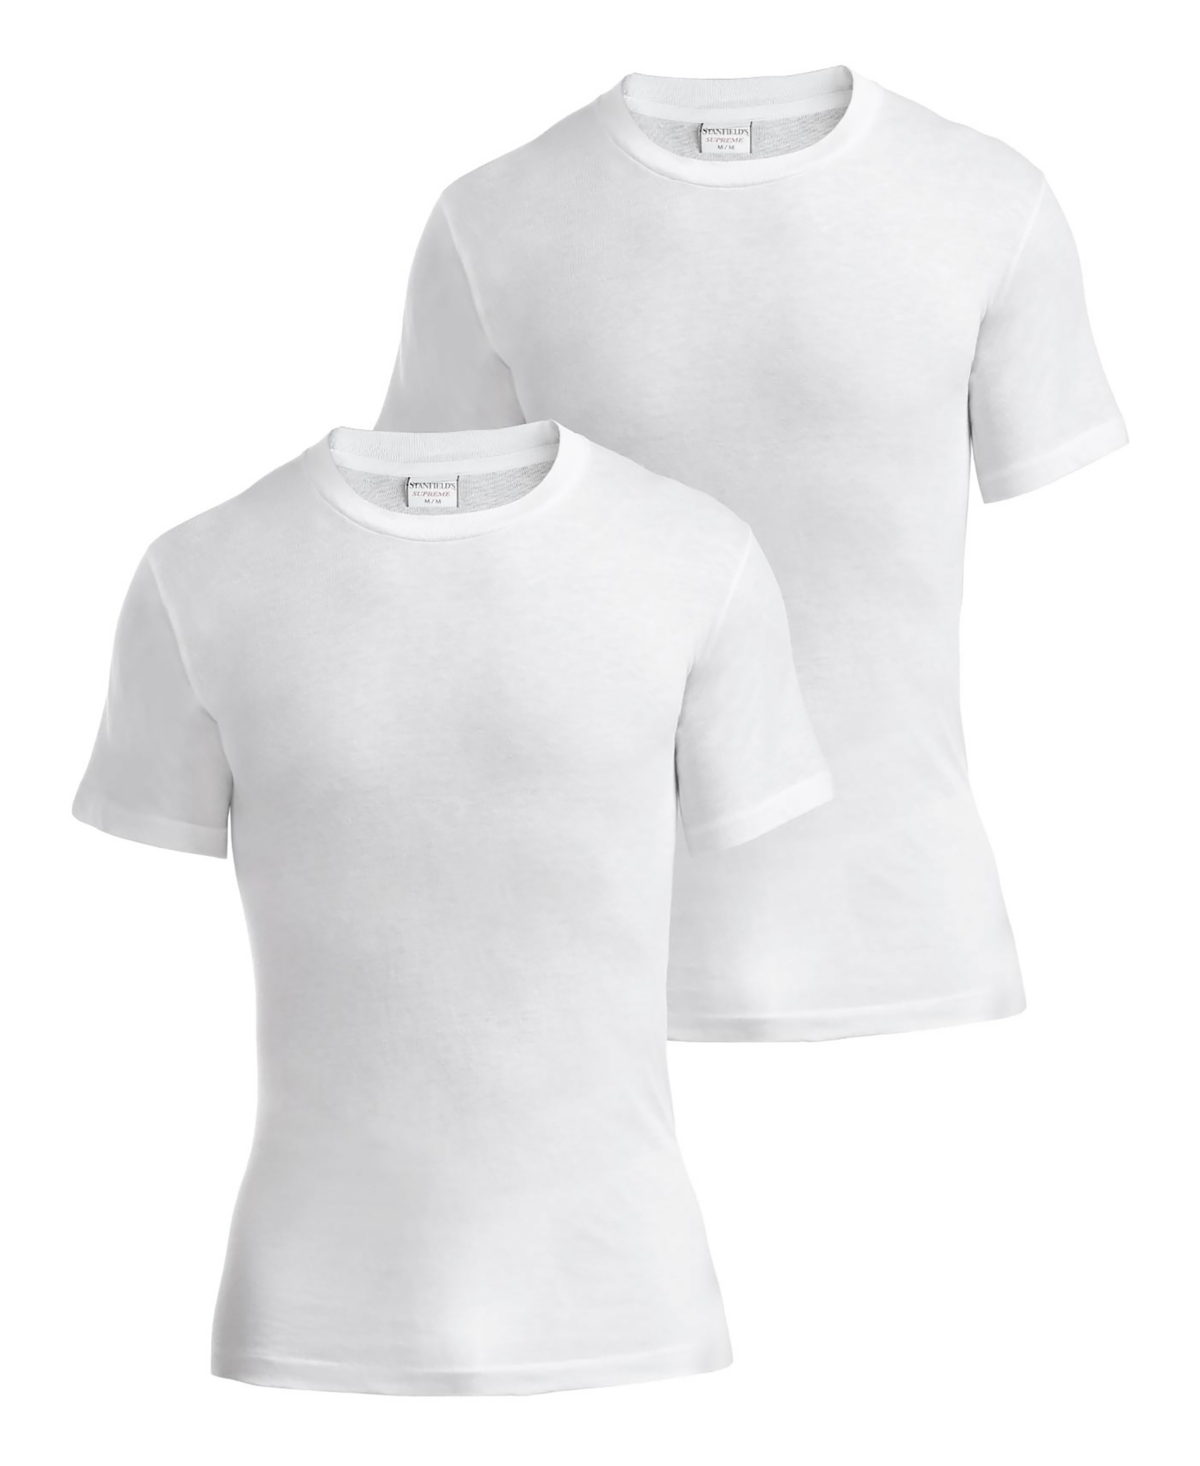 Men's Supreme Cotton Blend Crew Neck Undershirts, Pack of 2 - White